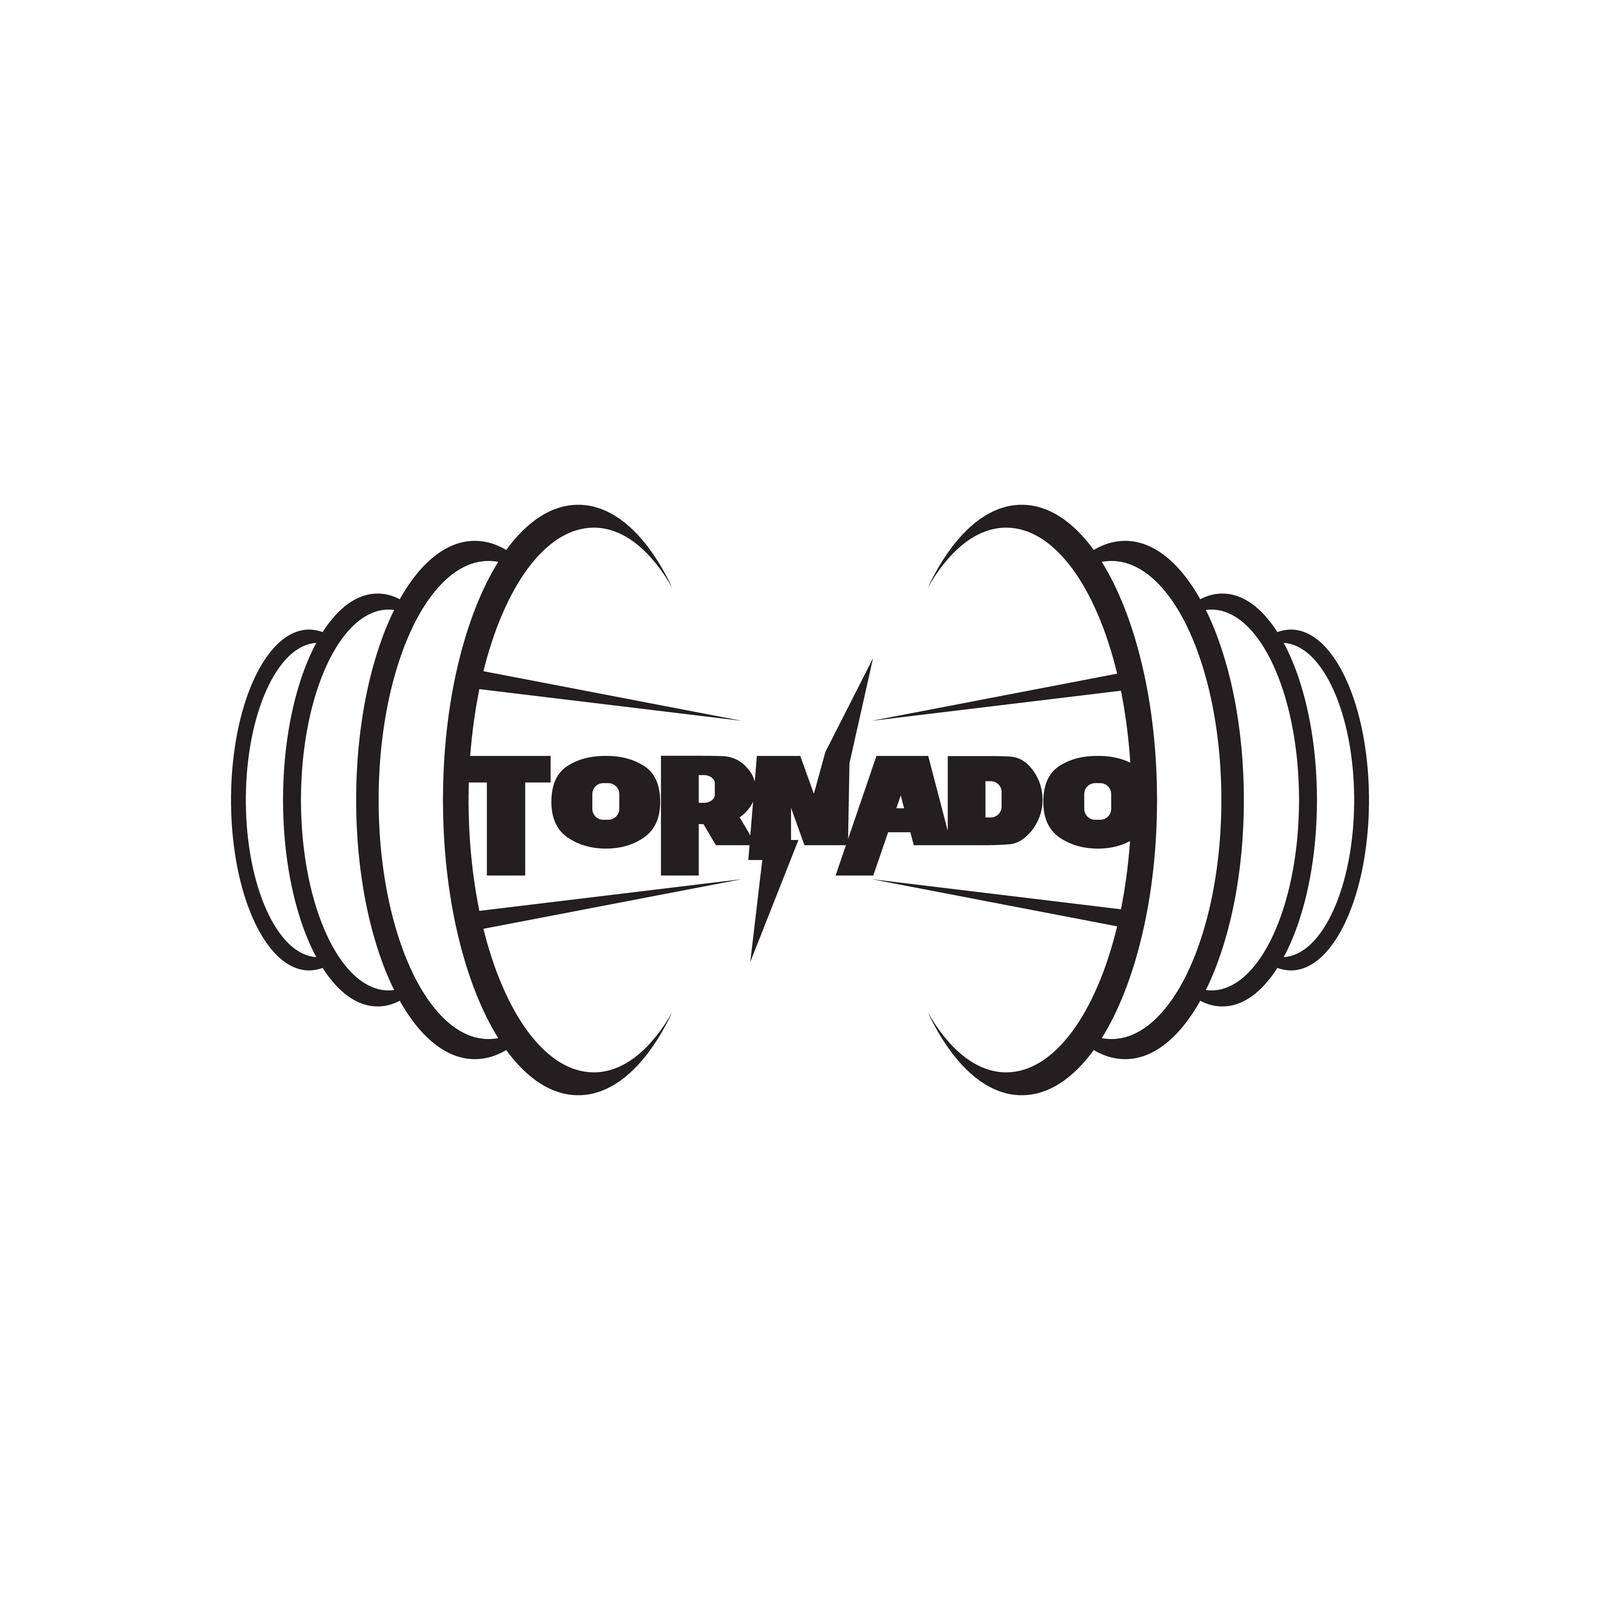 storm and tornado logo design vector by Anggasaputro